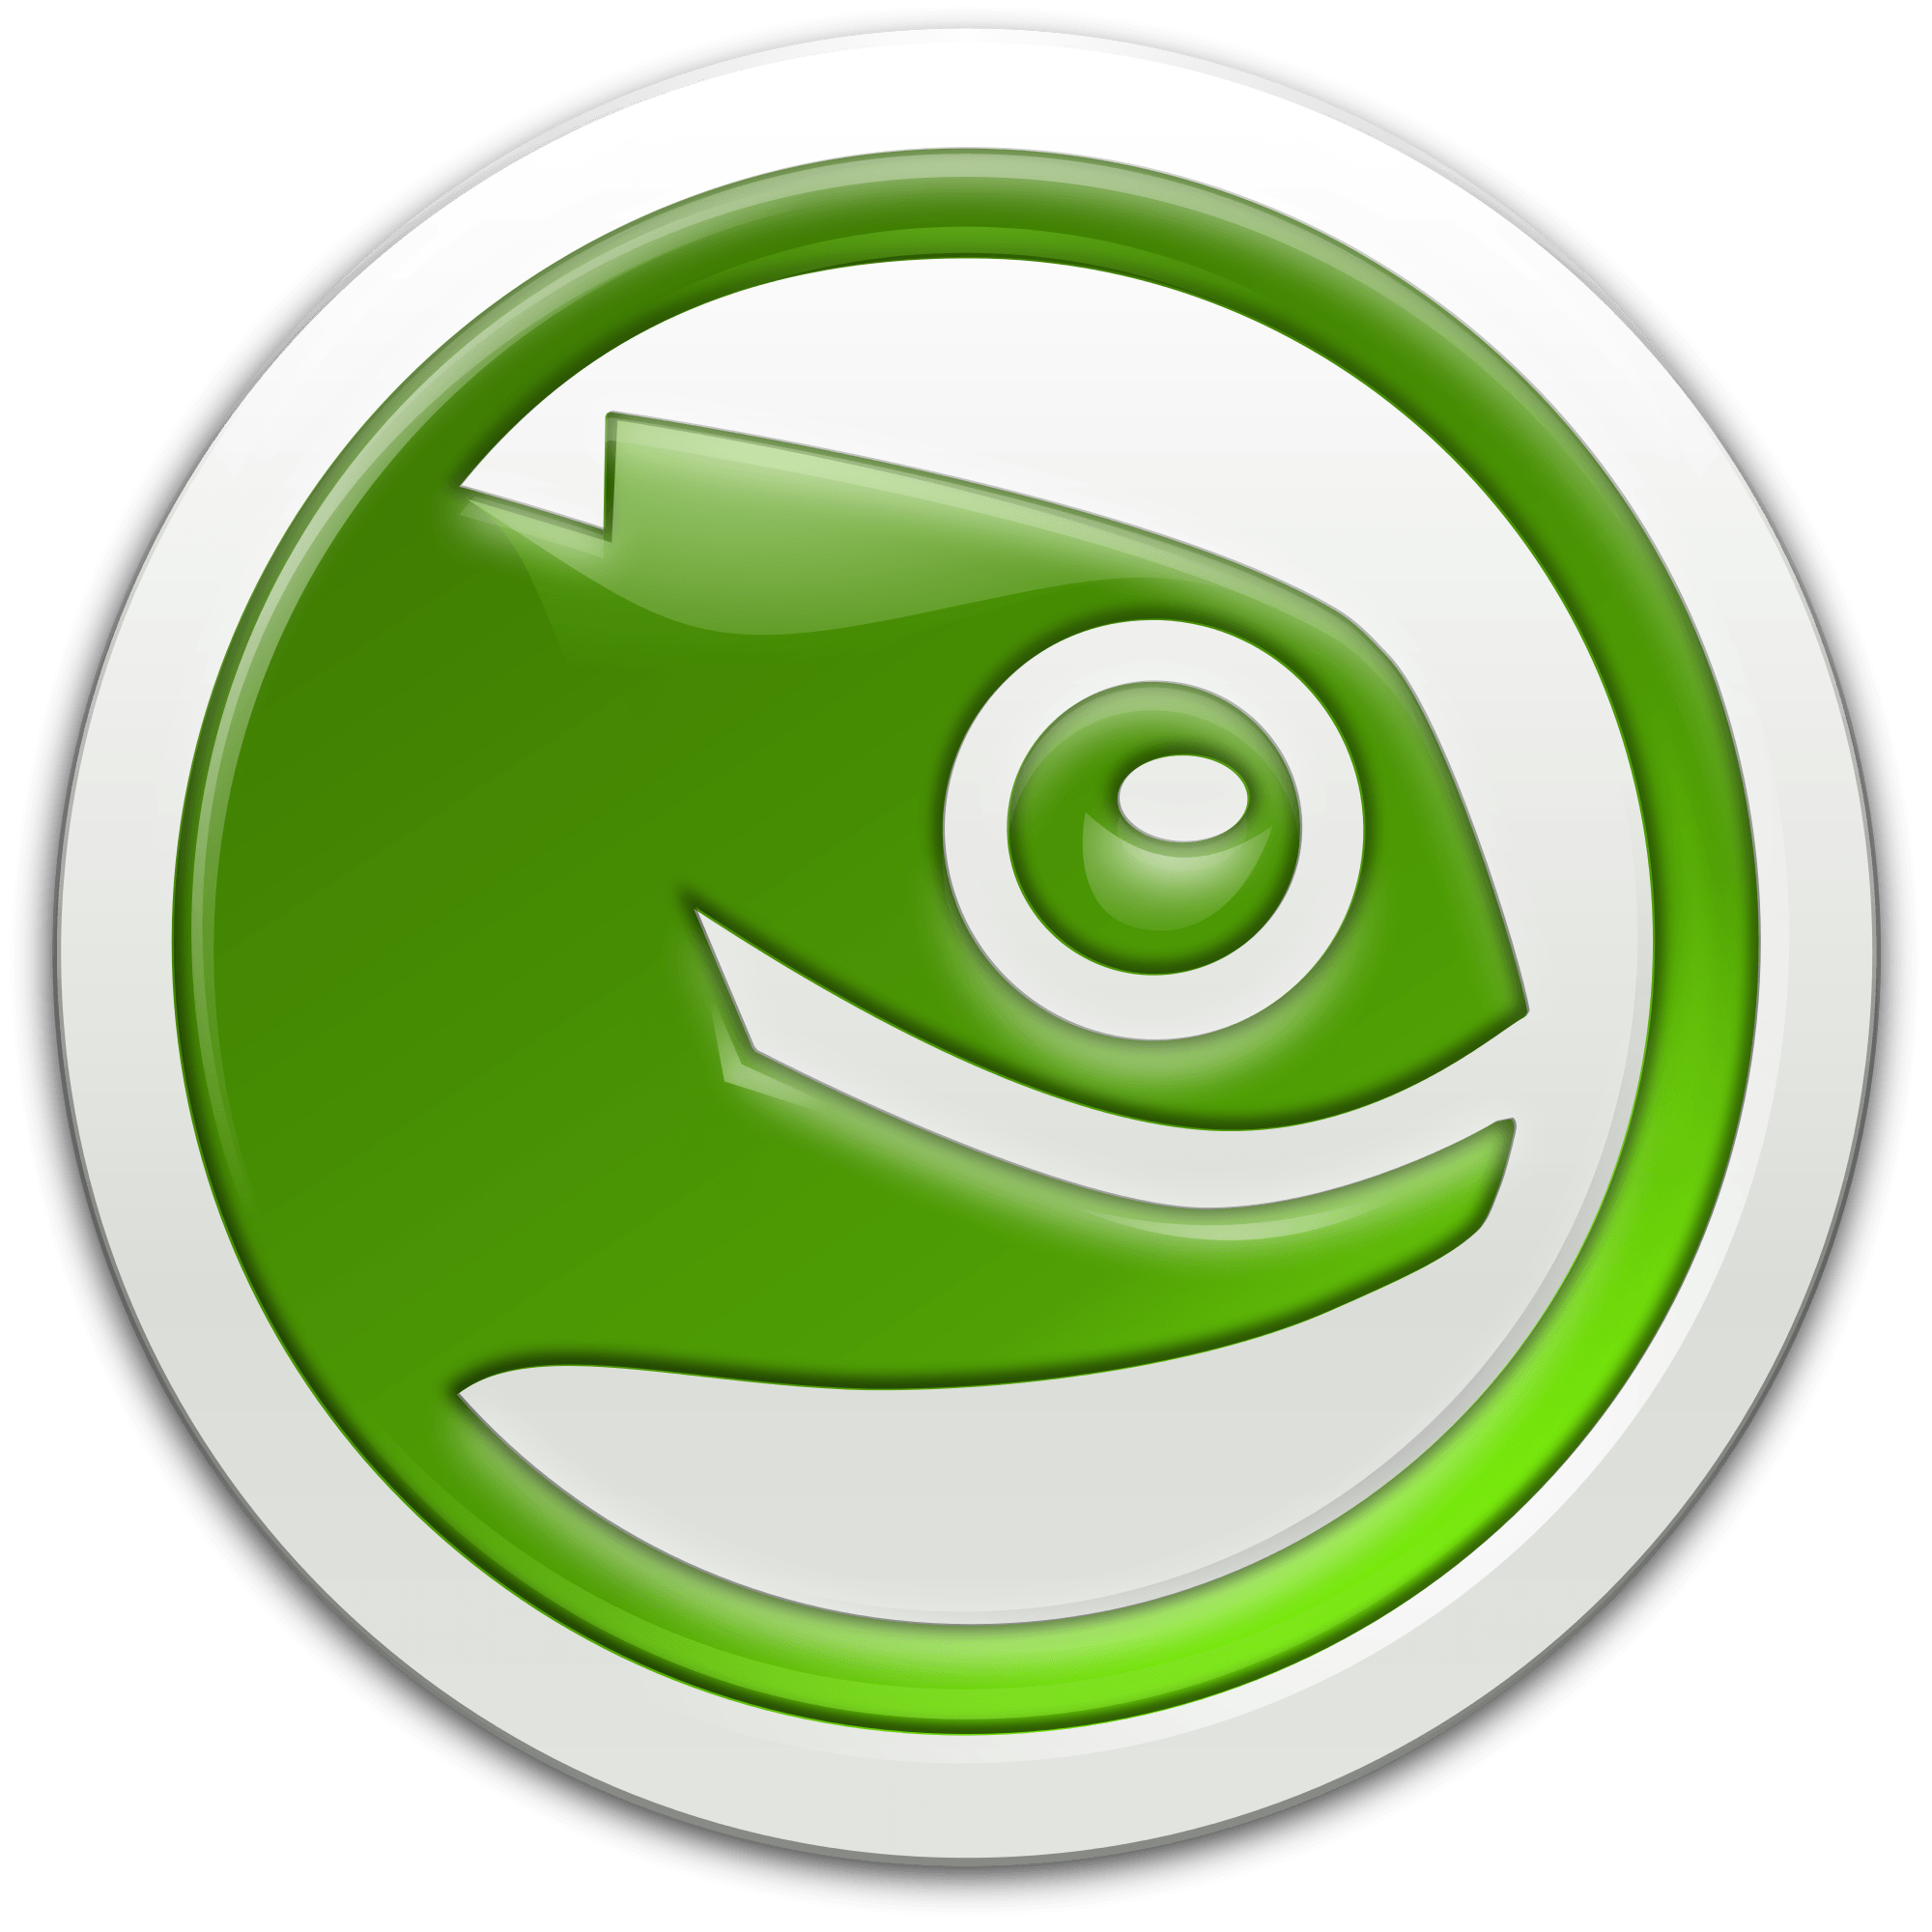 Suse Logo - OpenSUSE Geeko button bling7.svg